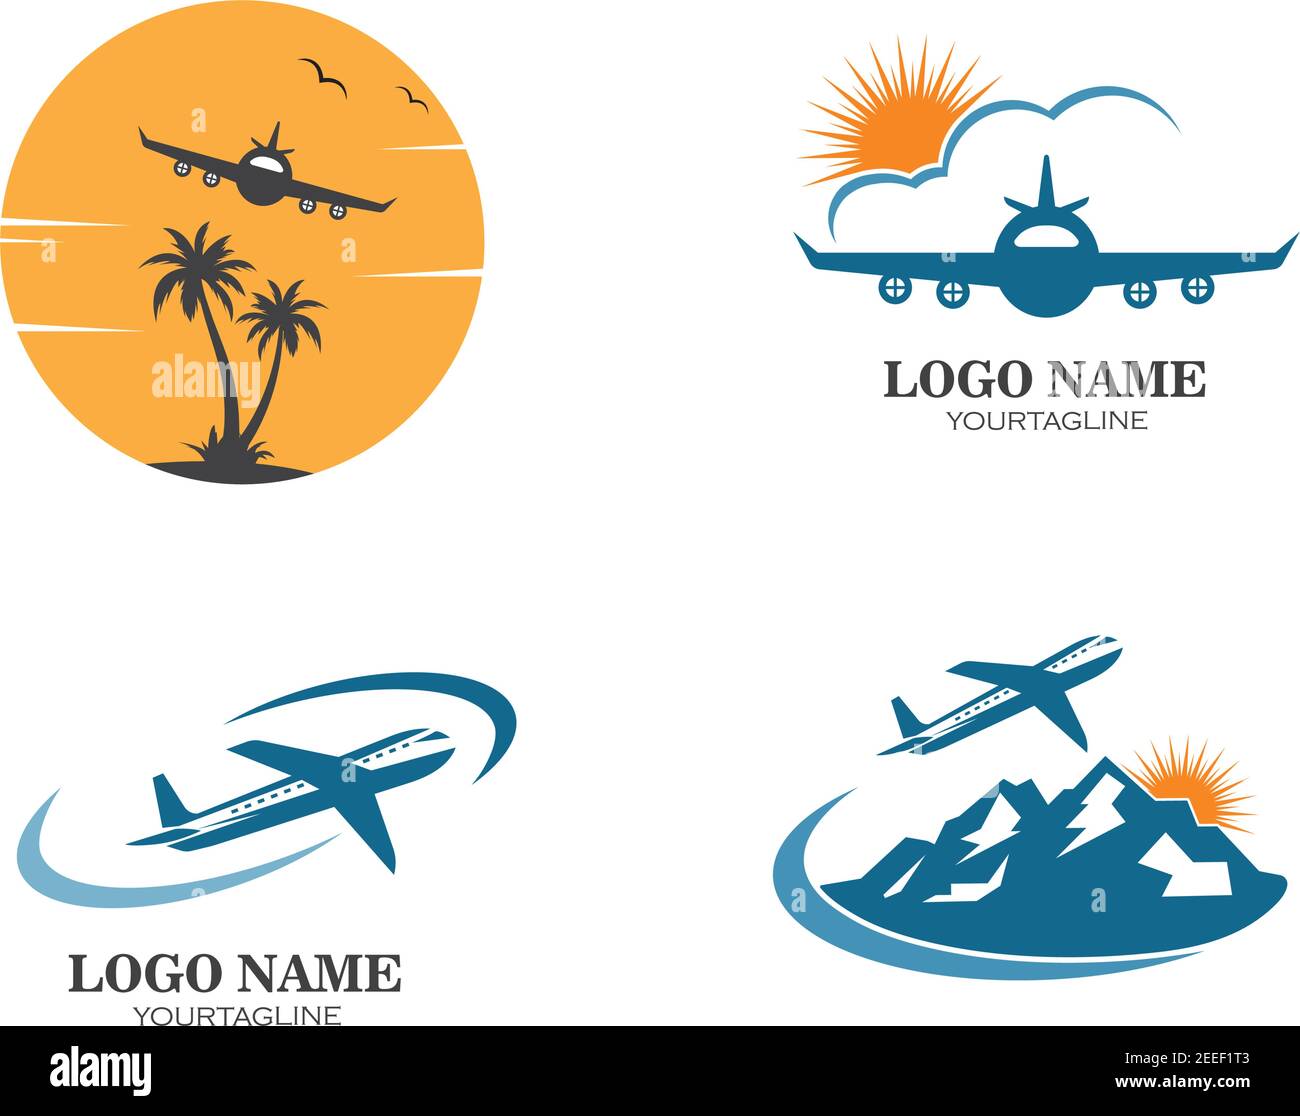 Plane Logo PNG Transparent Images Free Download | Vector Files | Pngtree